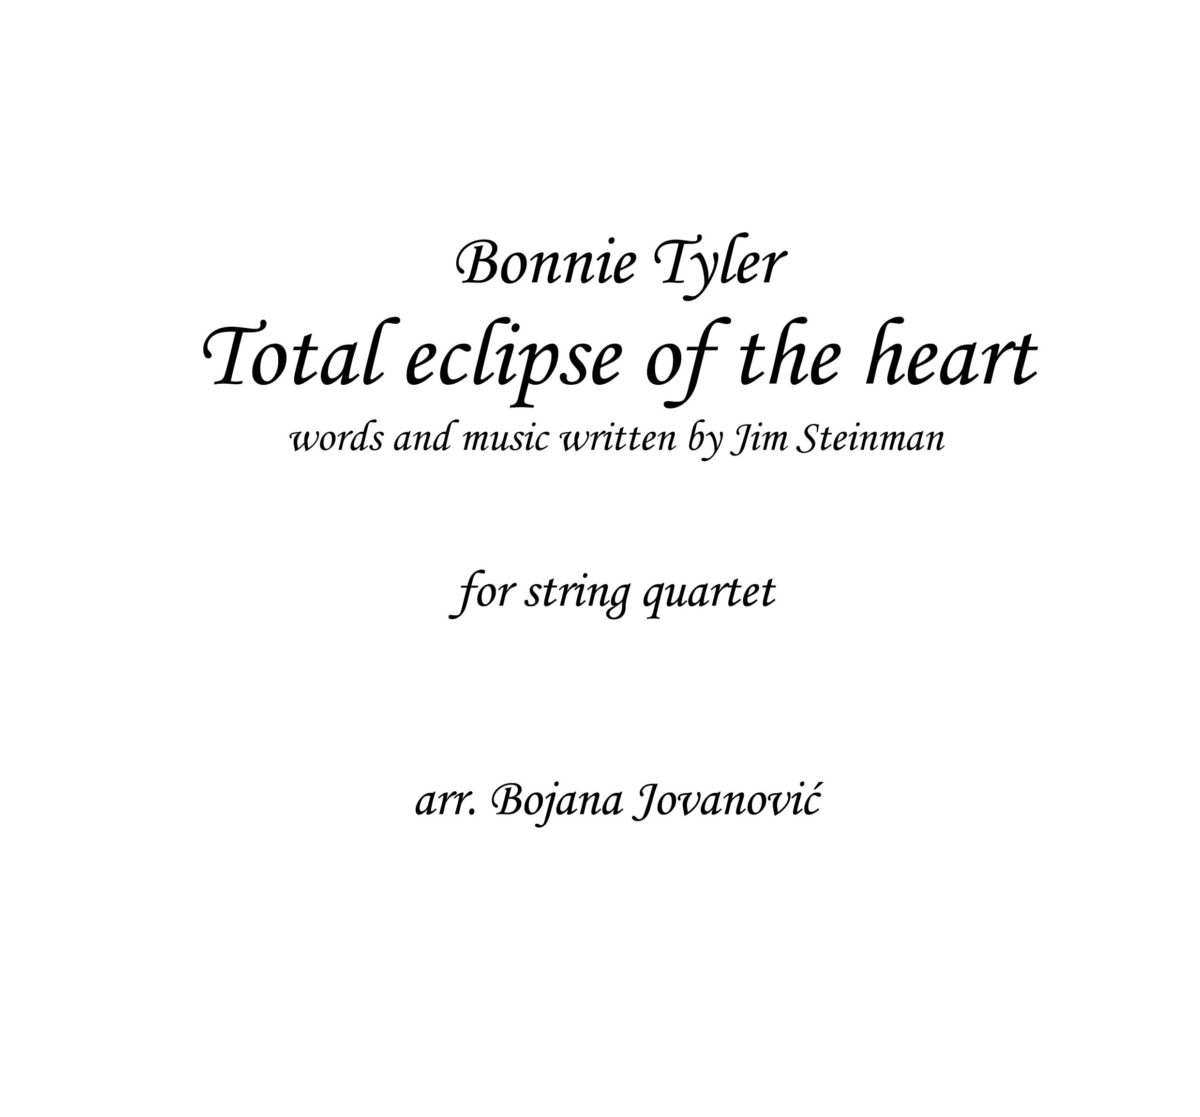 Total eclipse of heart (Bonnie Tyler) - Sheet Music